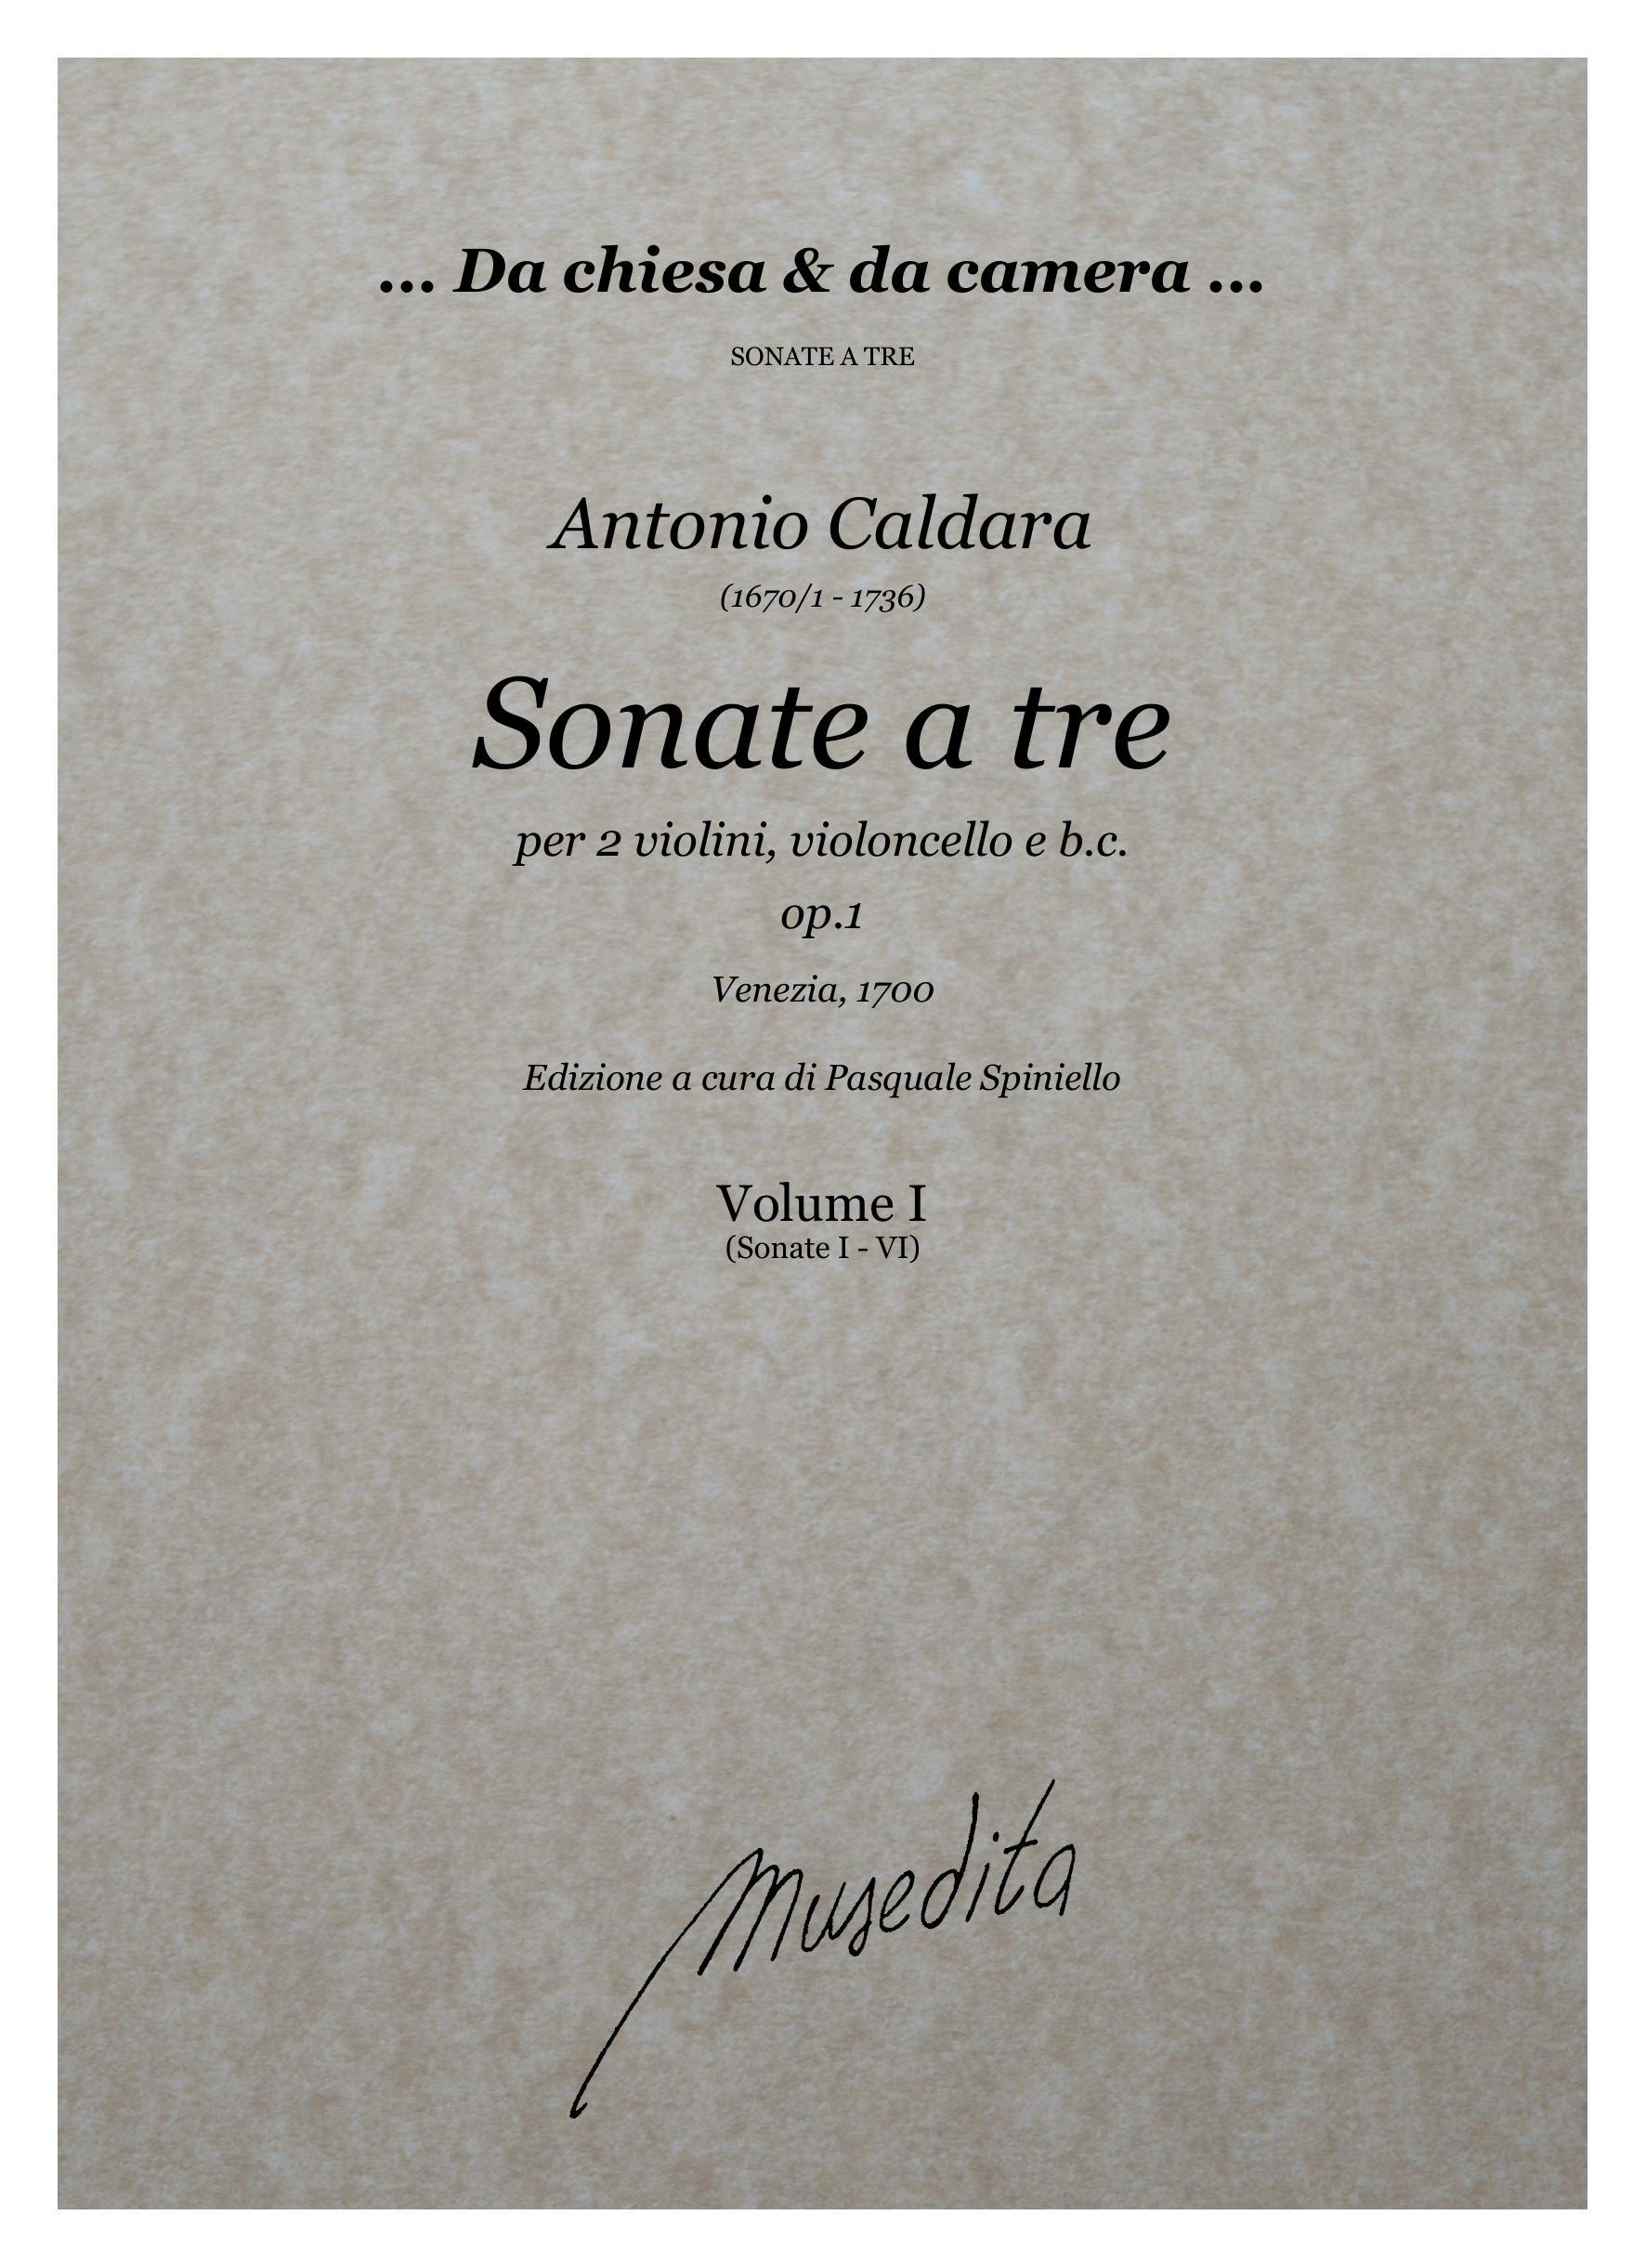 A.Caldara: Sonate a tre op.1 (Venezia, 1700)